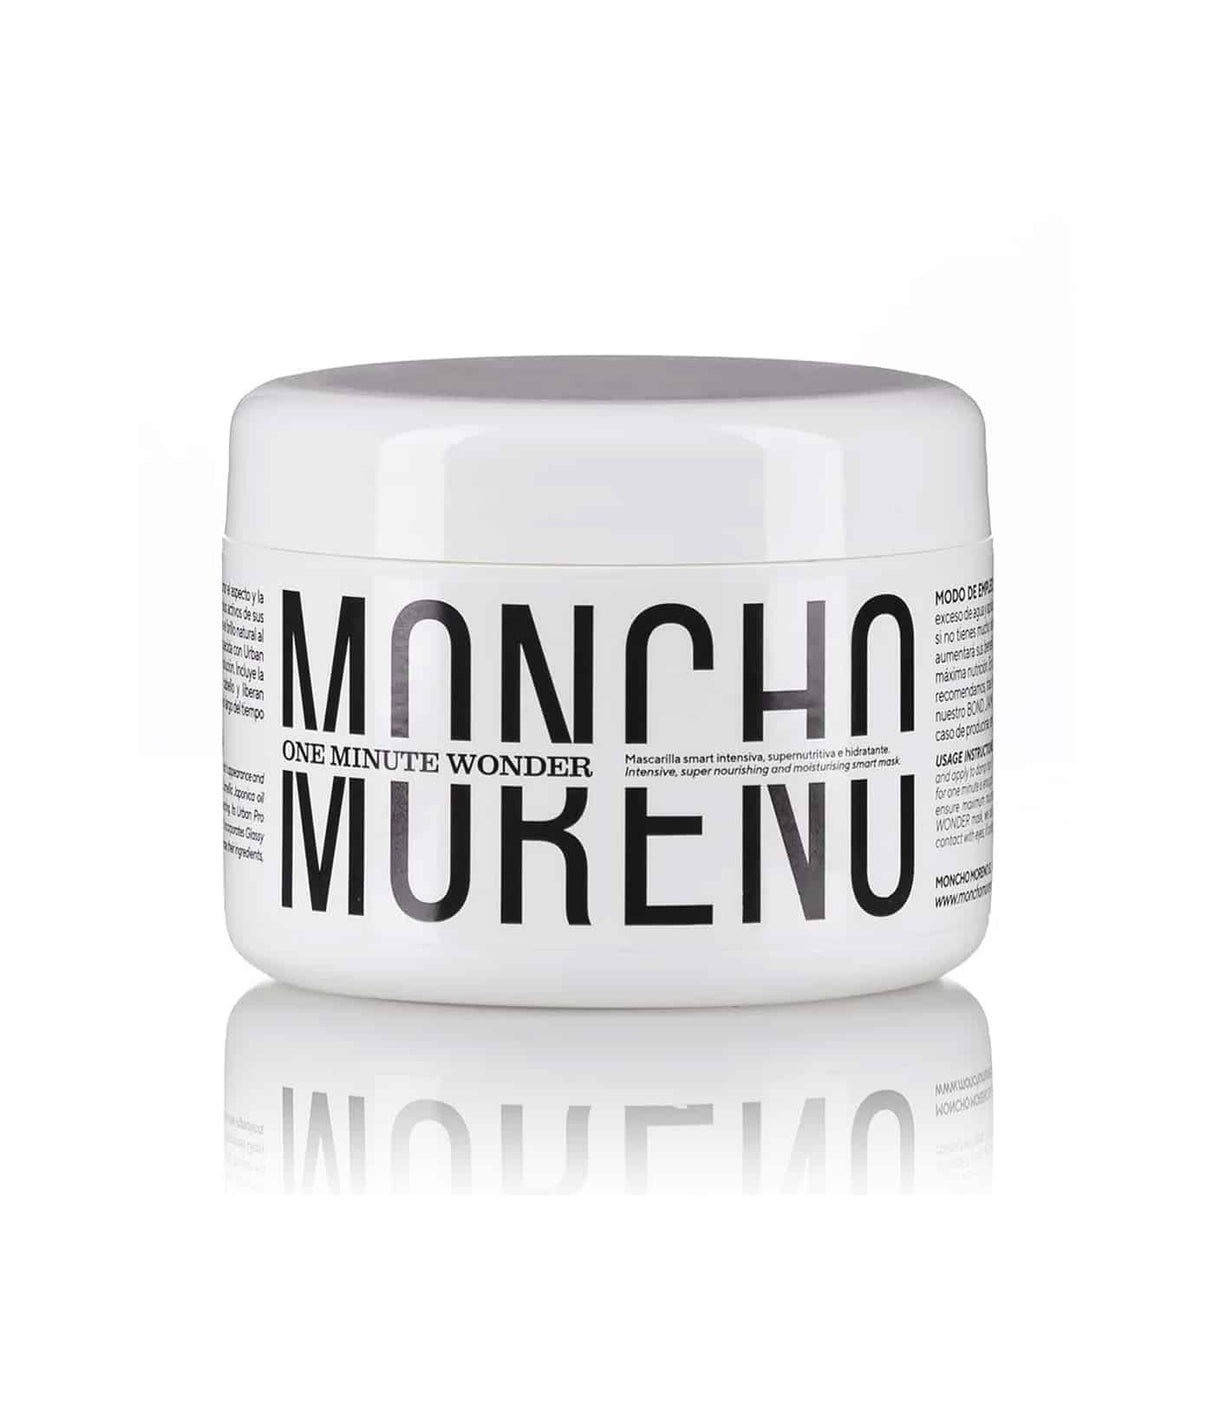 One Minute Wonder de Moncho Moreno